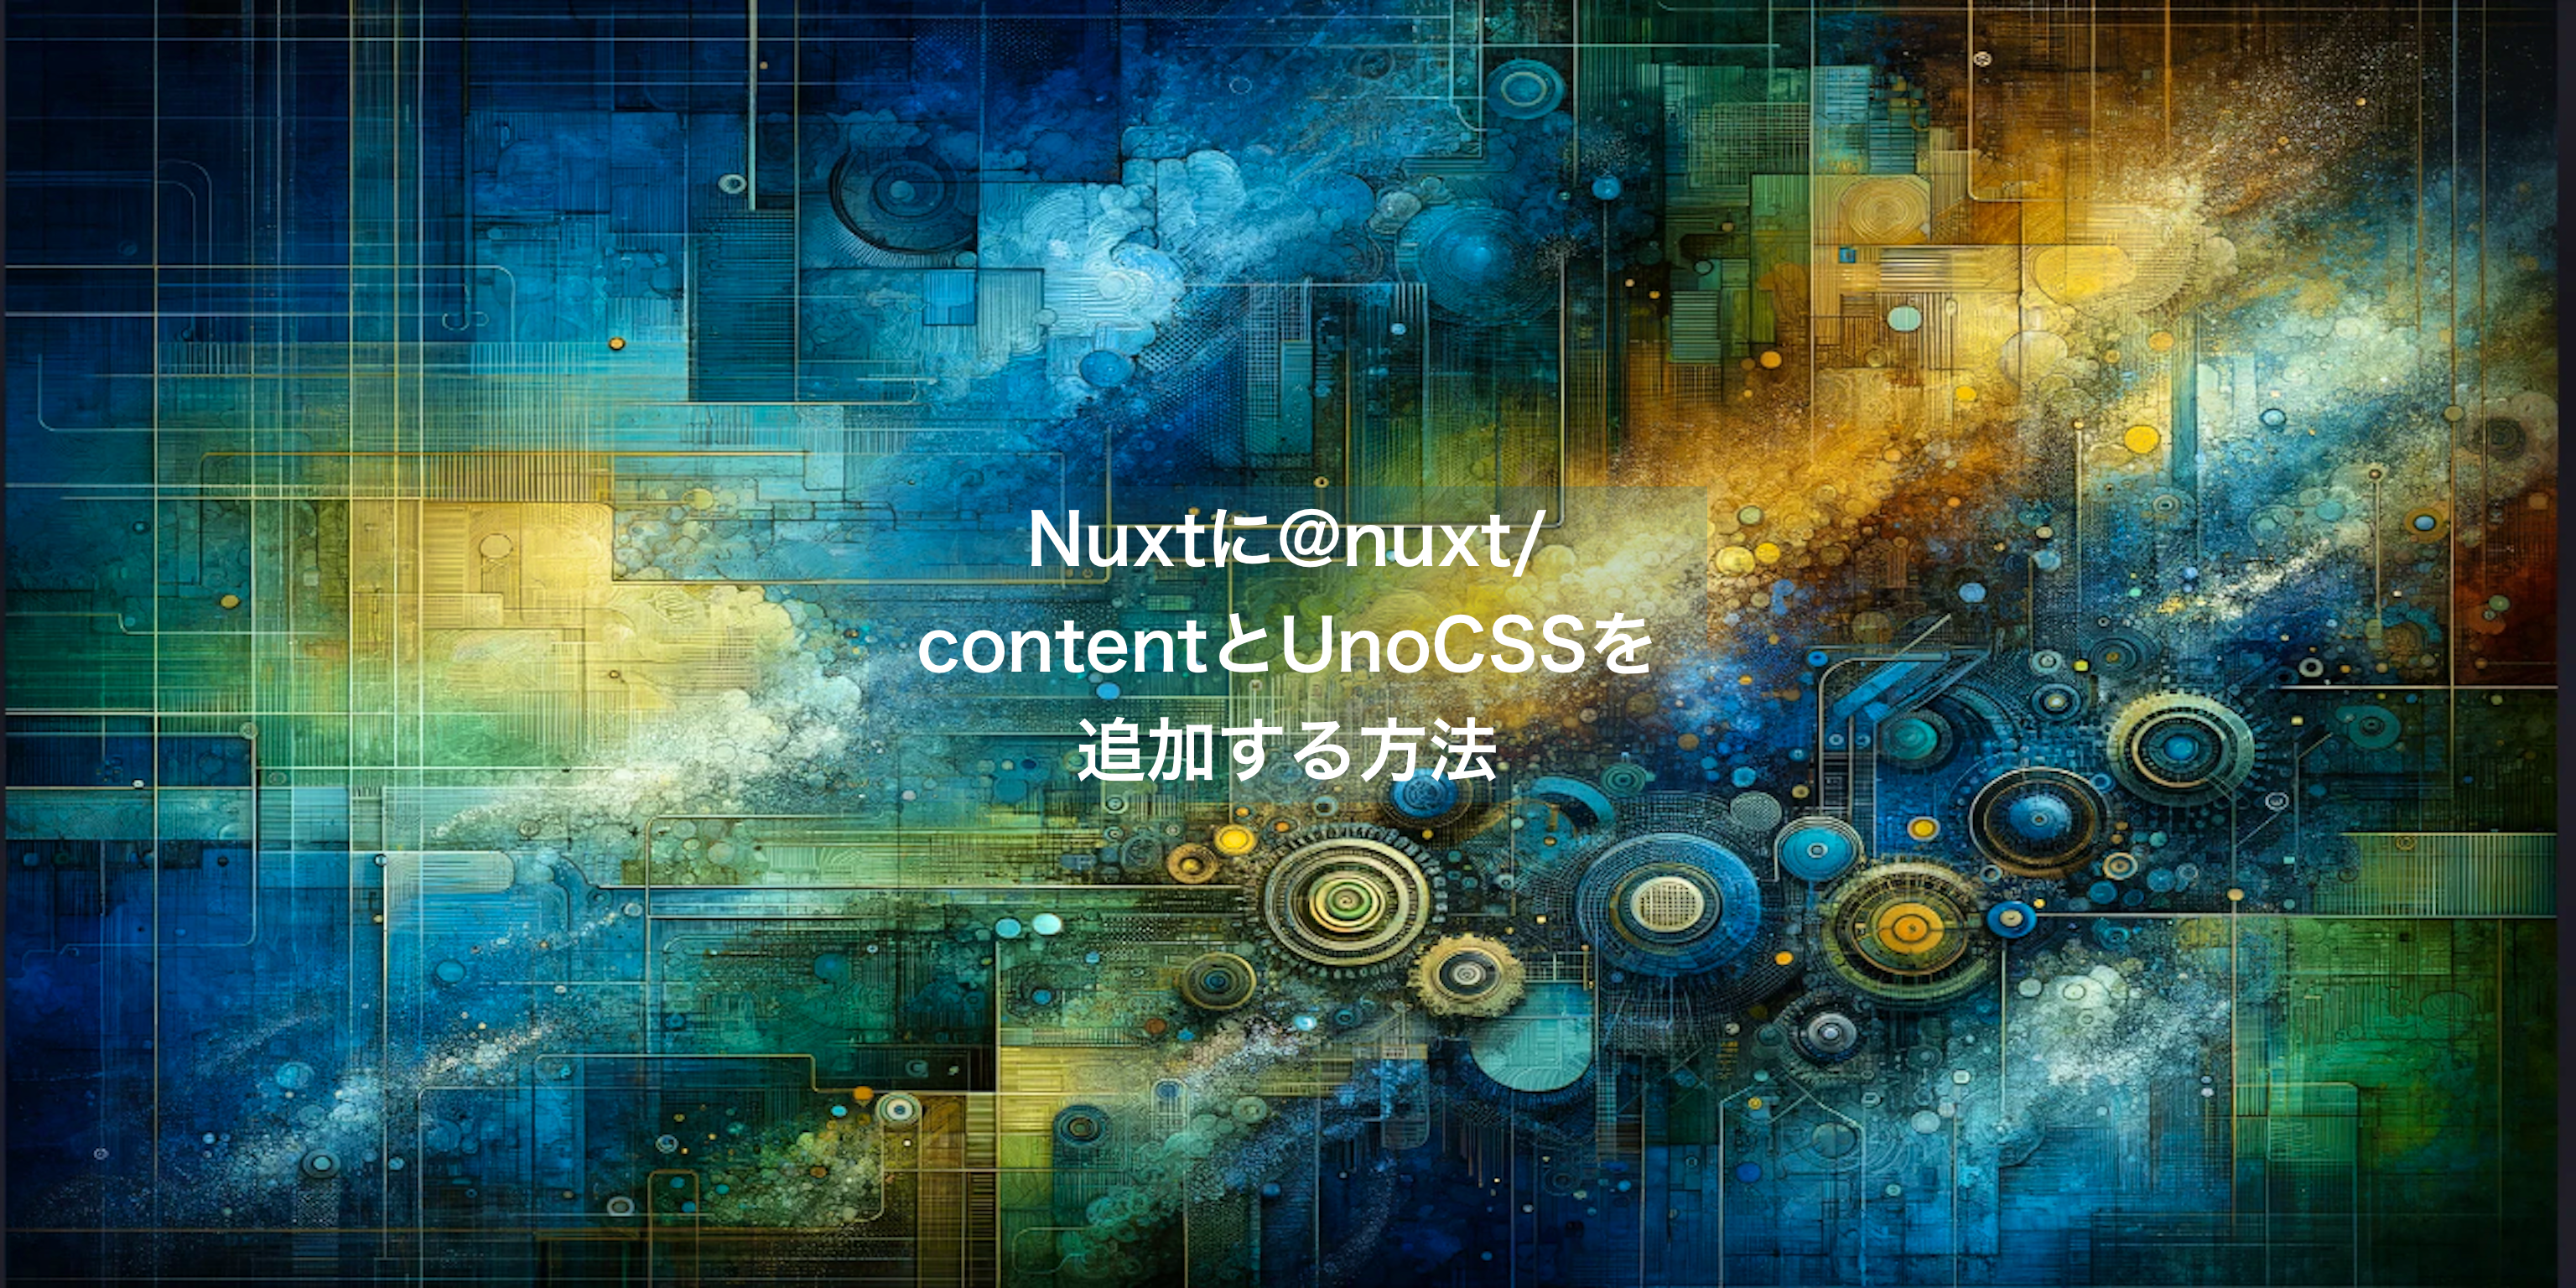 Nuxtに@nuxt/contentとUnoCSSを追加する方法